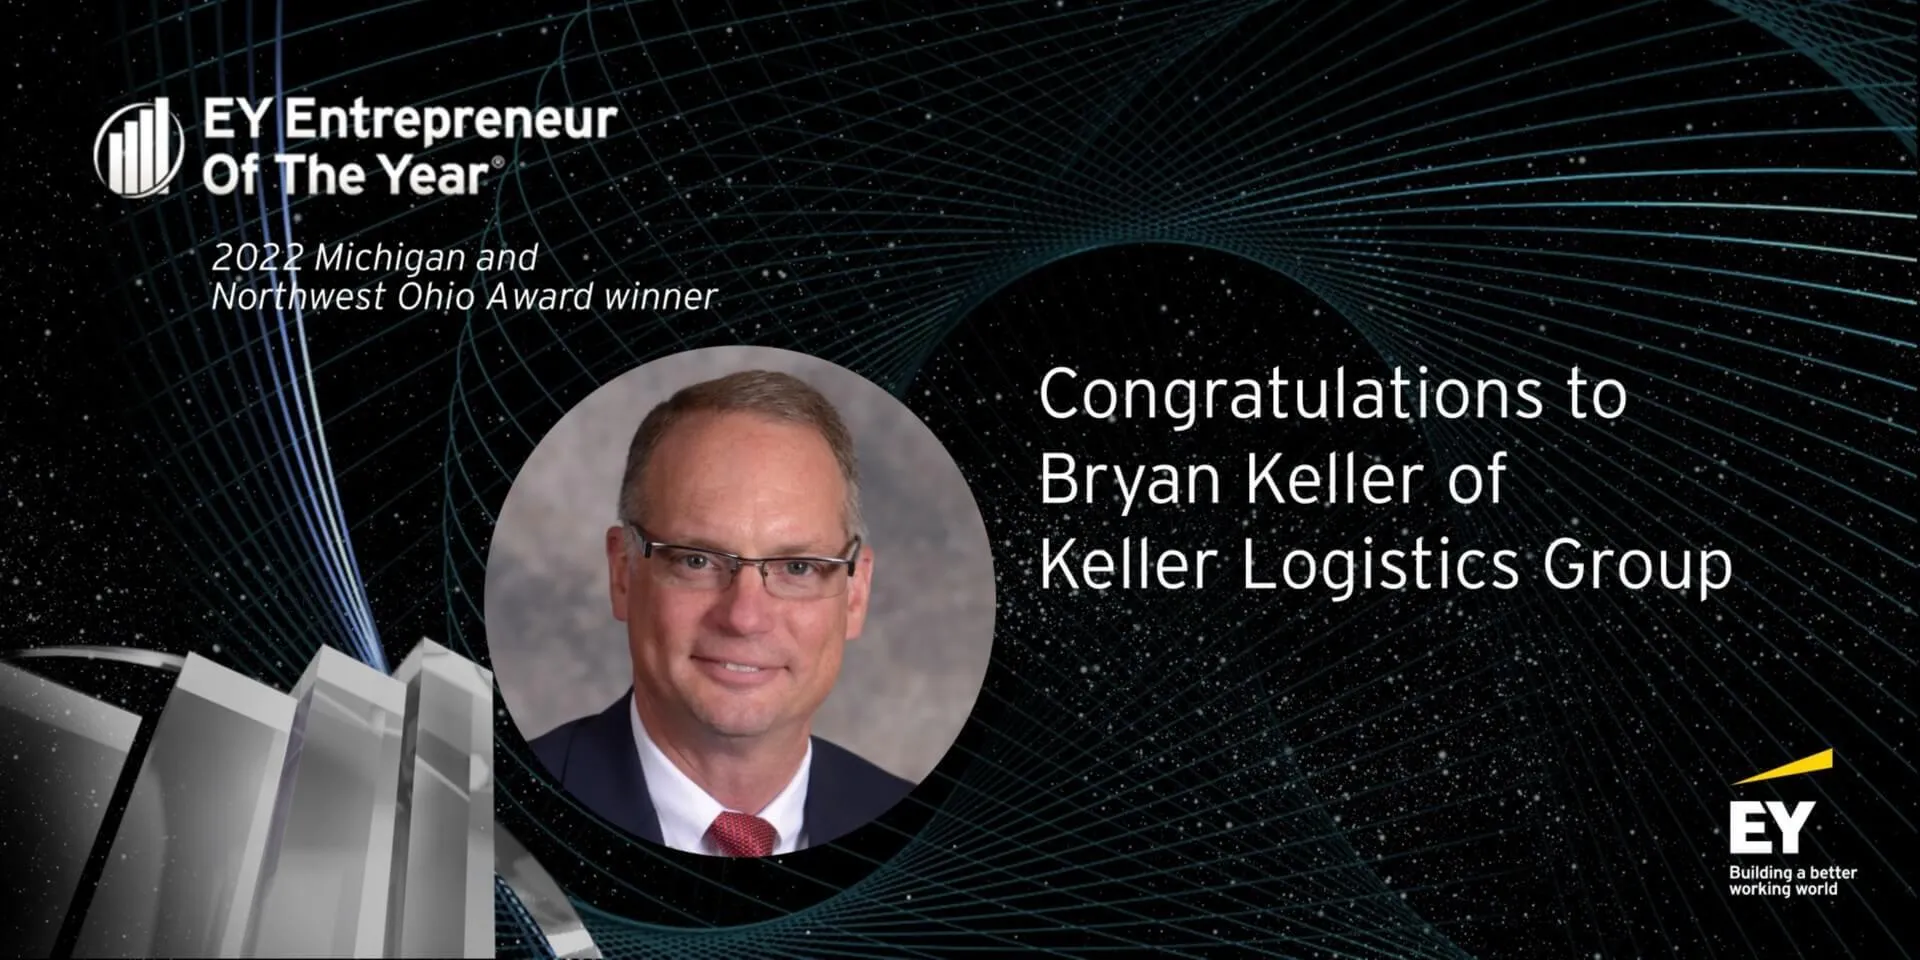 Entrepreneur of the Year Award presented to Bryan Keller